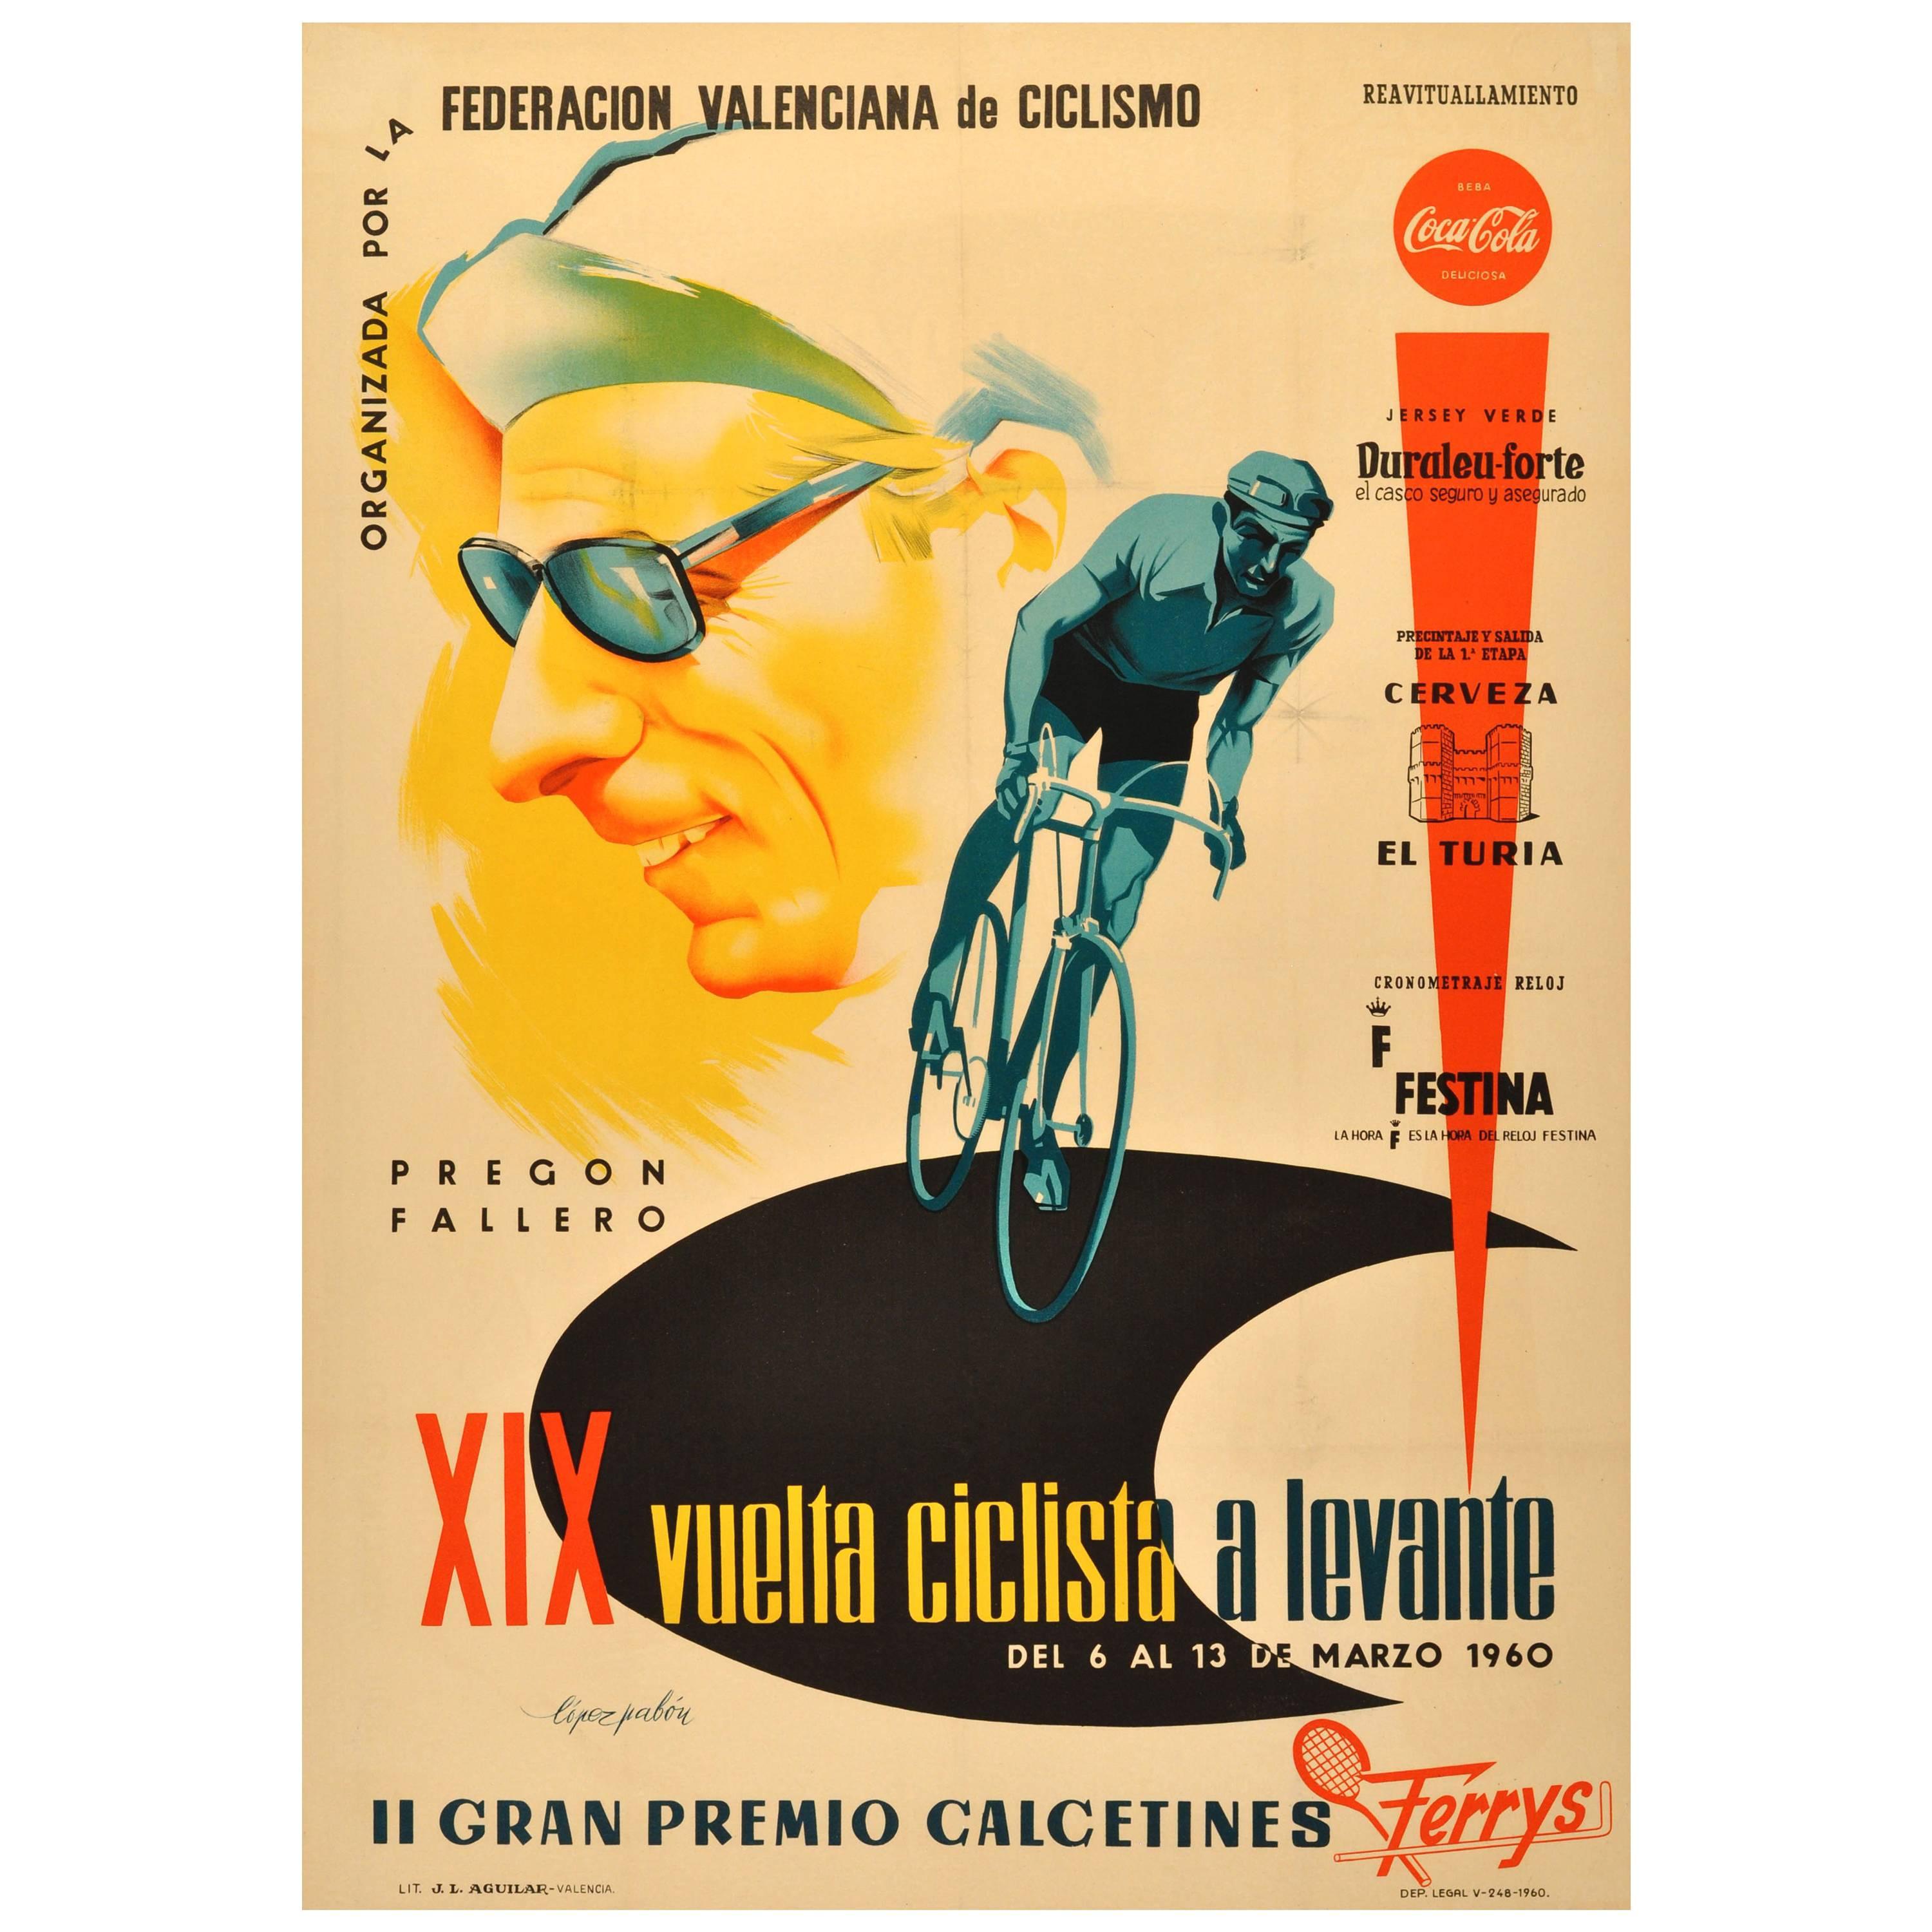 Original Vintage Cycling Tour Poster for the XIX Vuelta Ciclista a Levante 1960